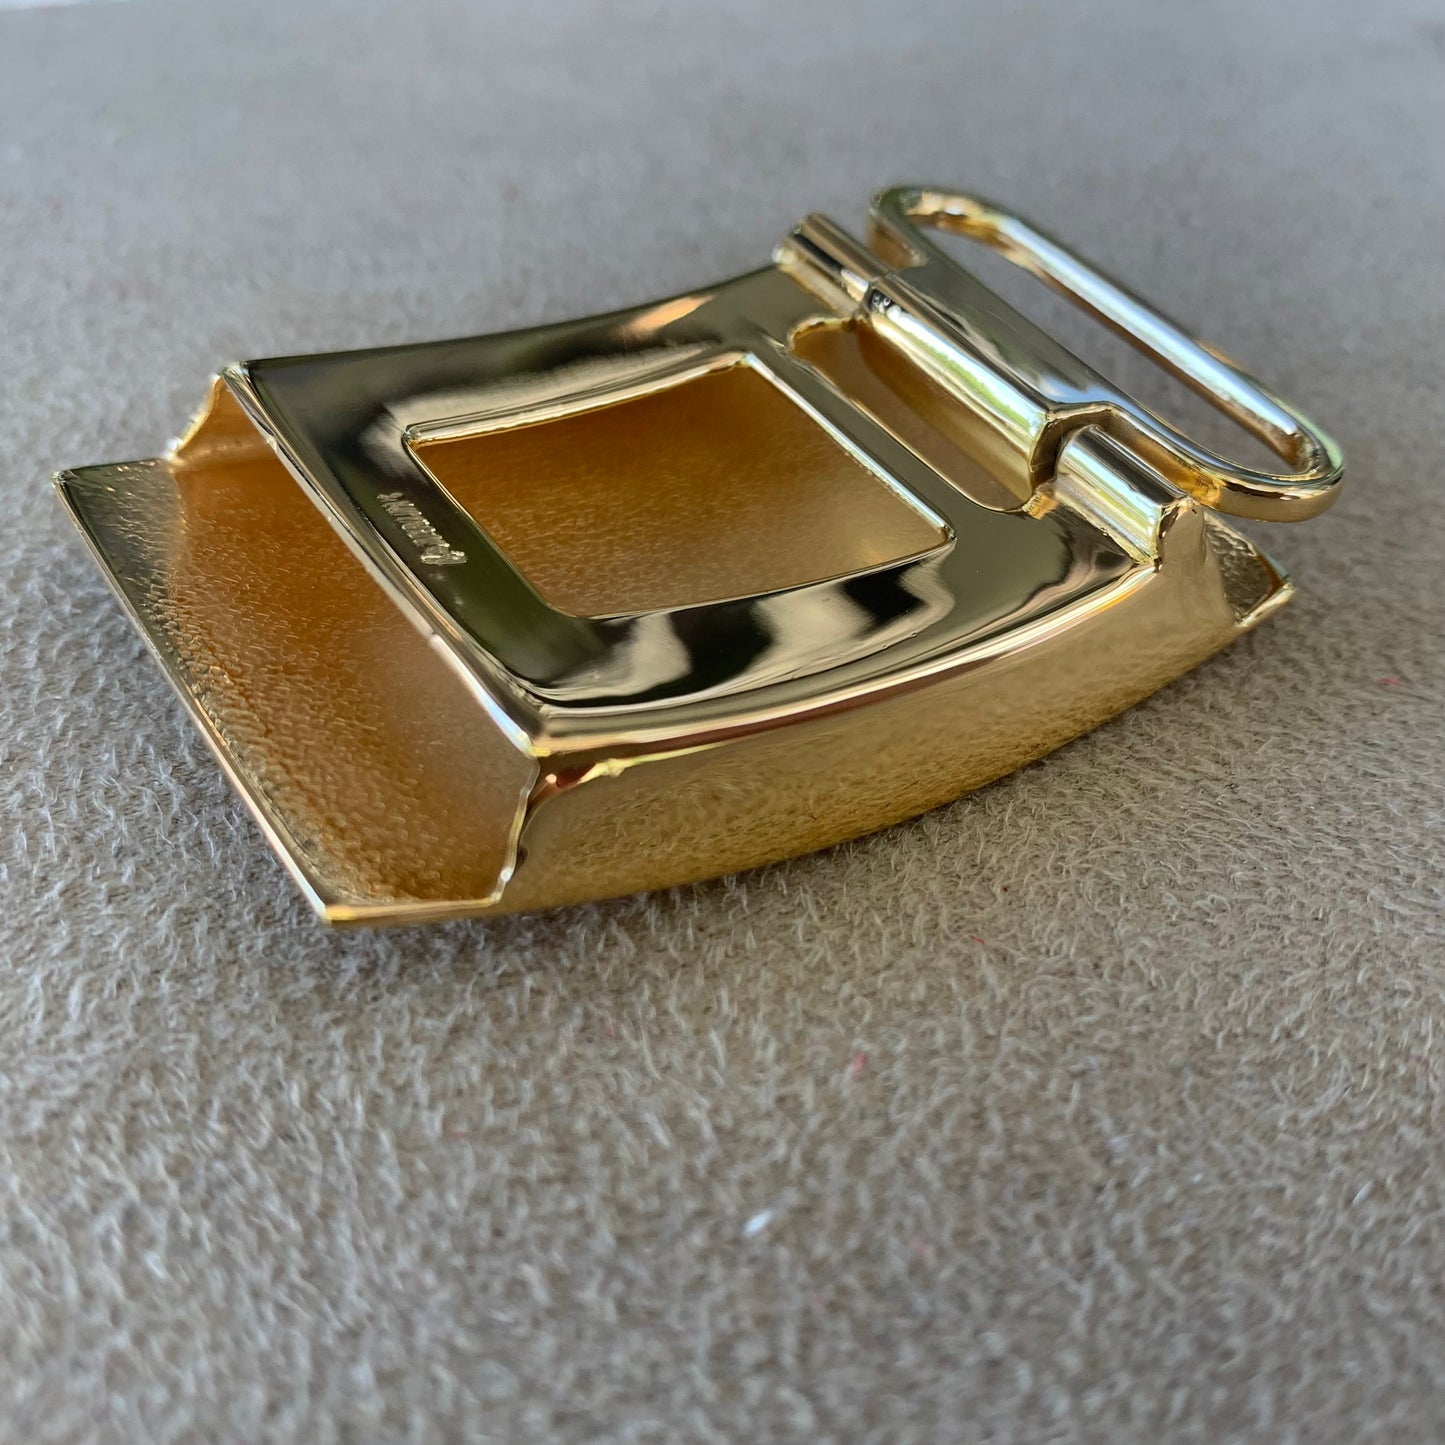 Gold Vermeil Belt Buckle | 1 1/4" Sterling Silver Belt Buckle with 24 Karat Vermeil | Monogram Hand Engraved | Made in the USA.